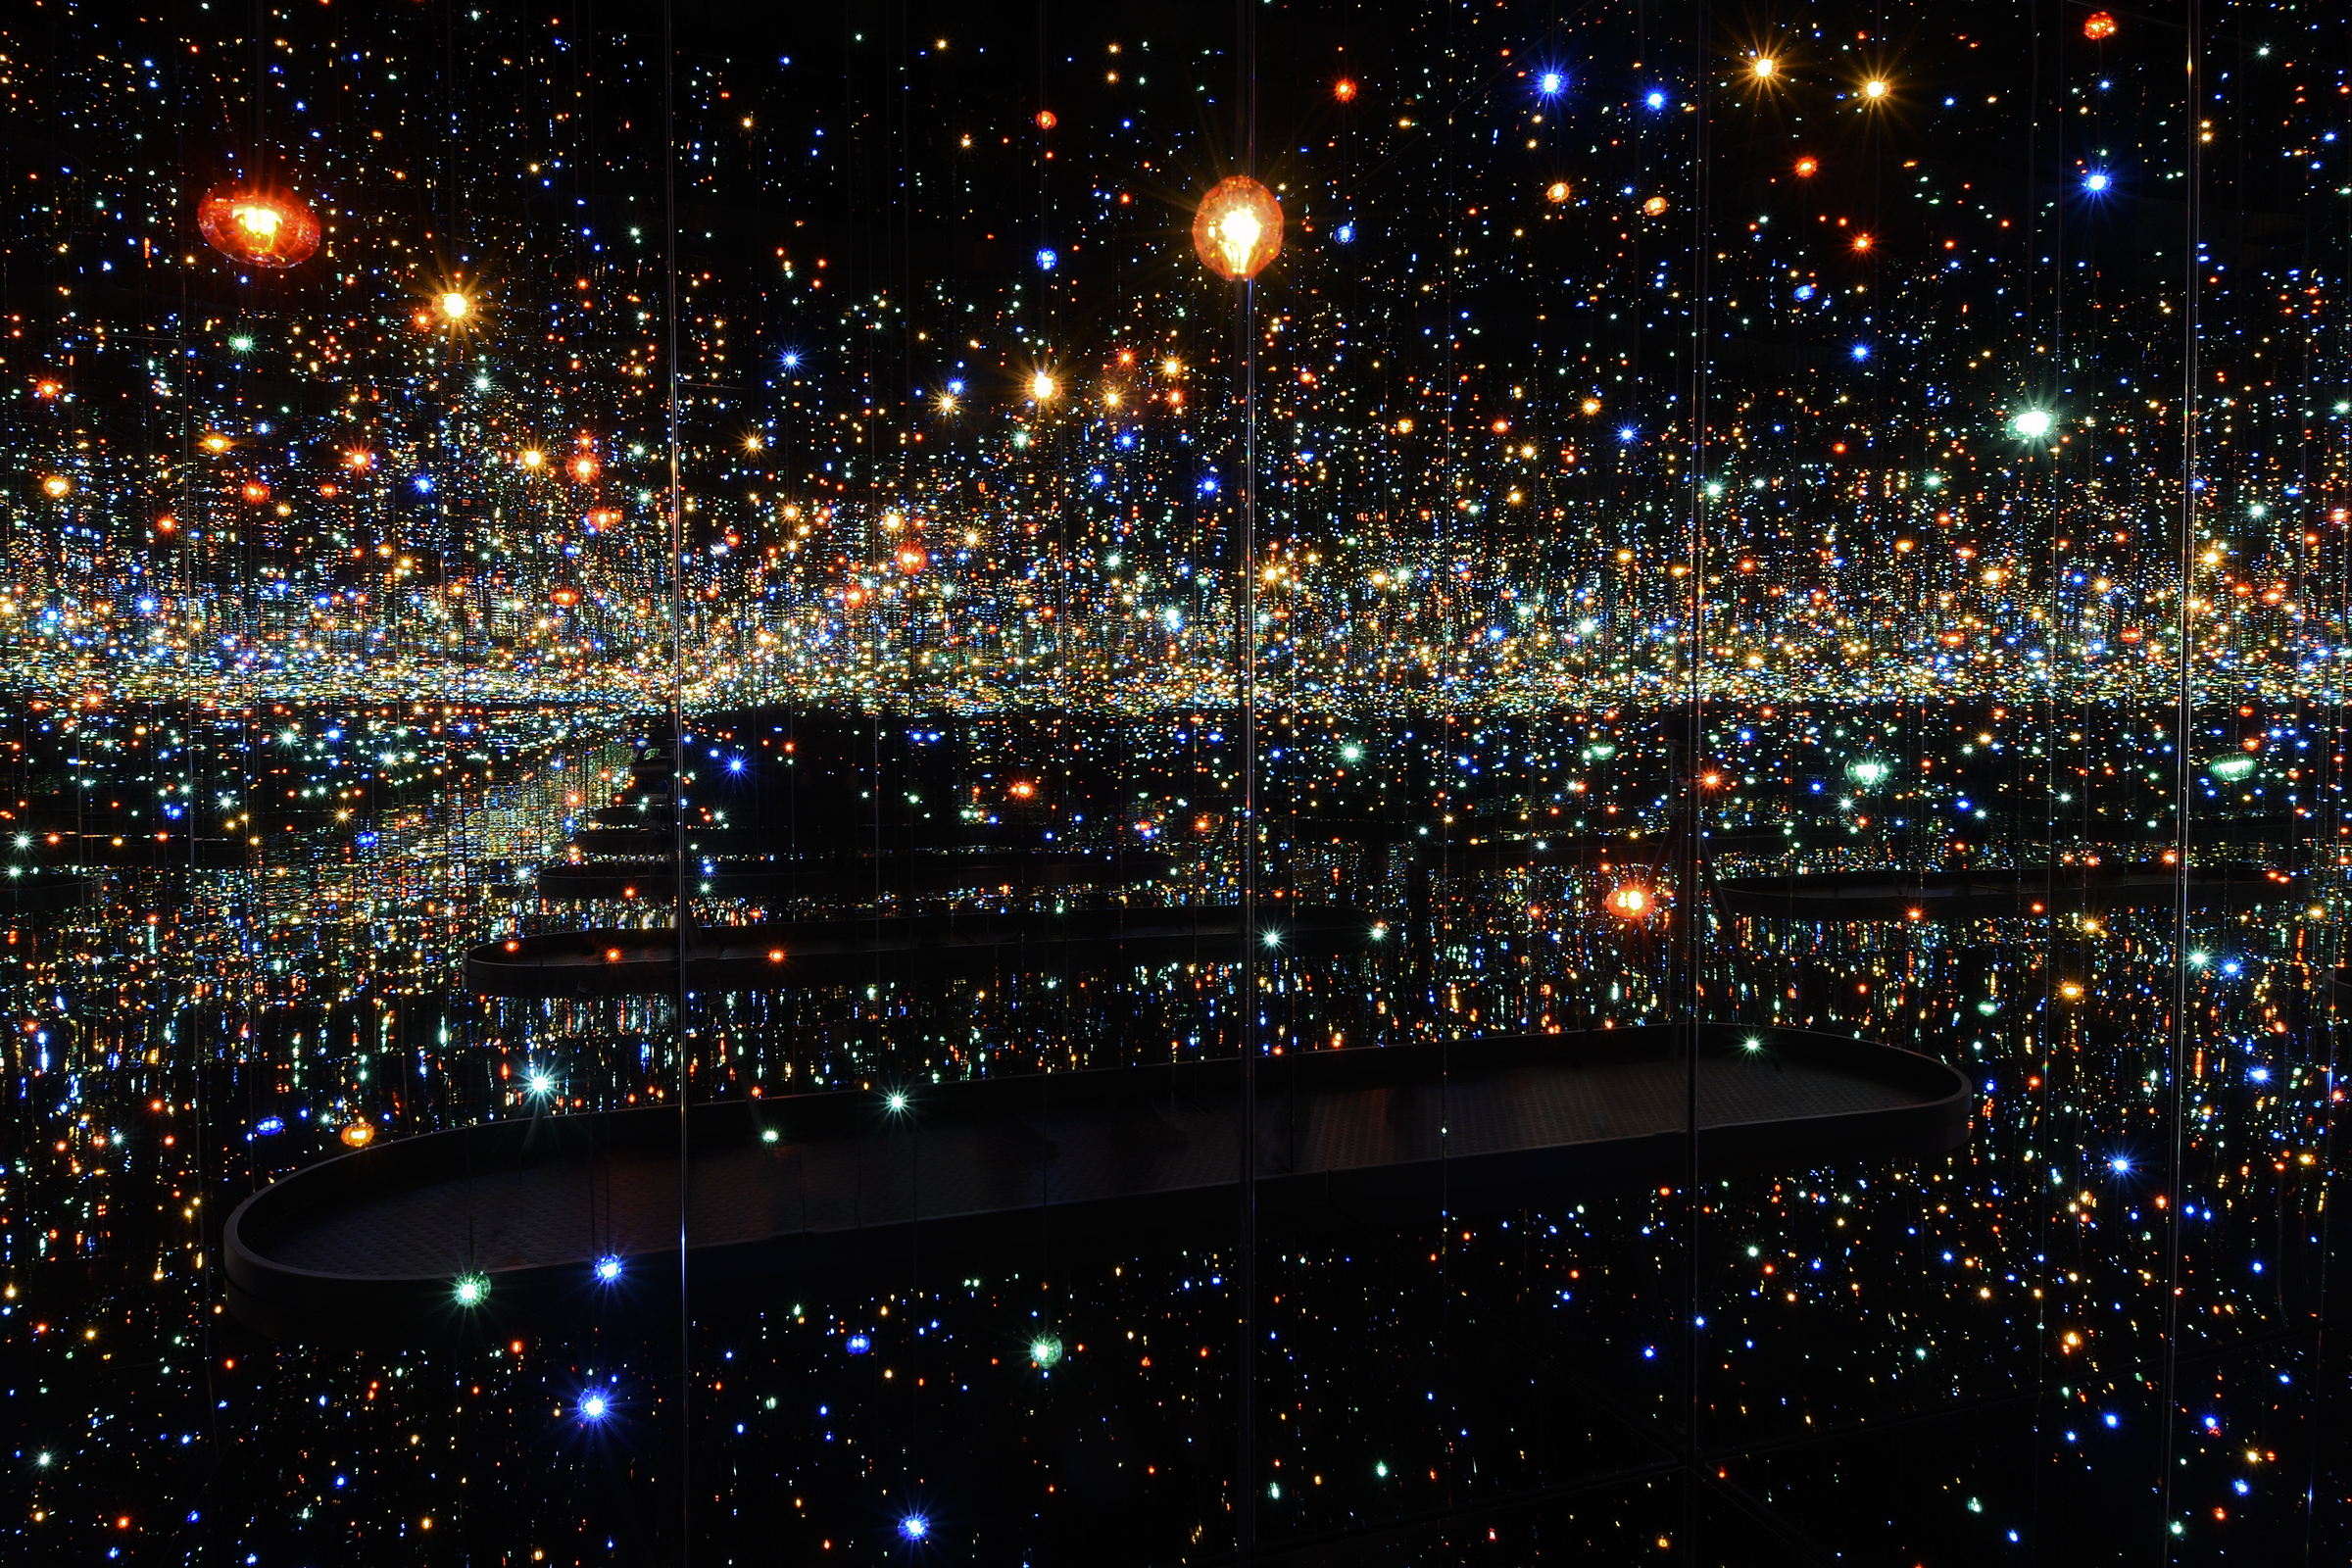 Yayoi Kusama Infinity Mirrored Room – The Souls of Millions of Light Years Away, 2013